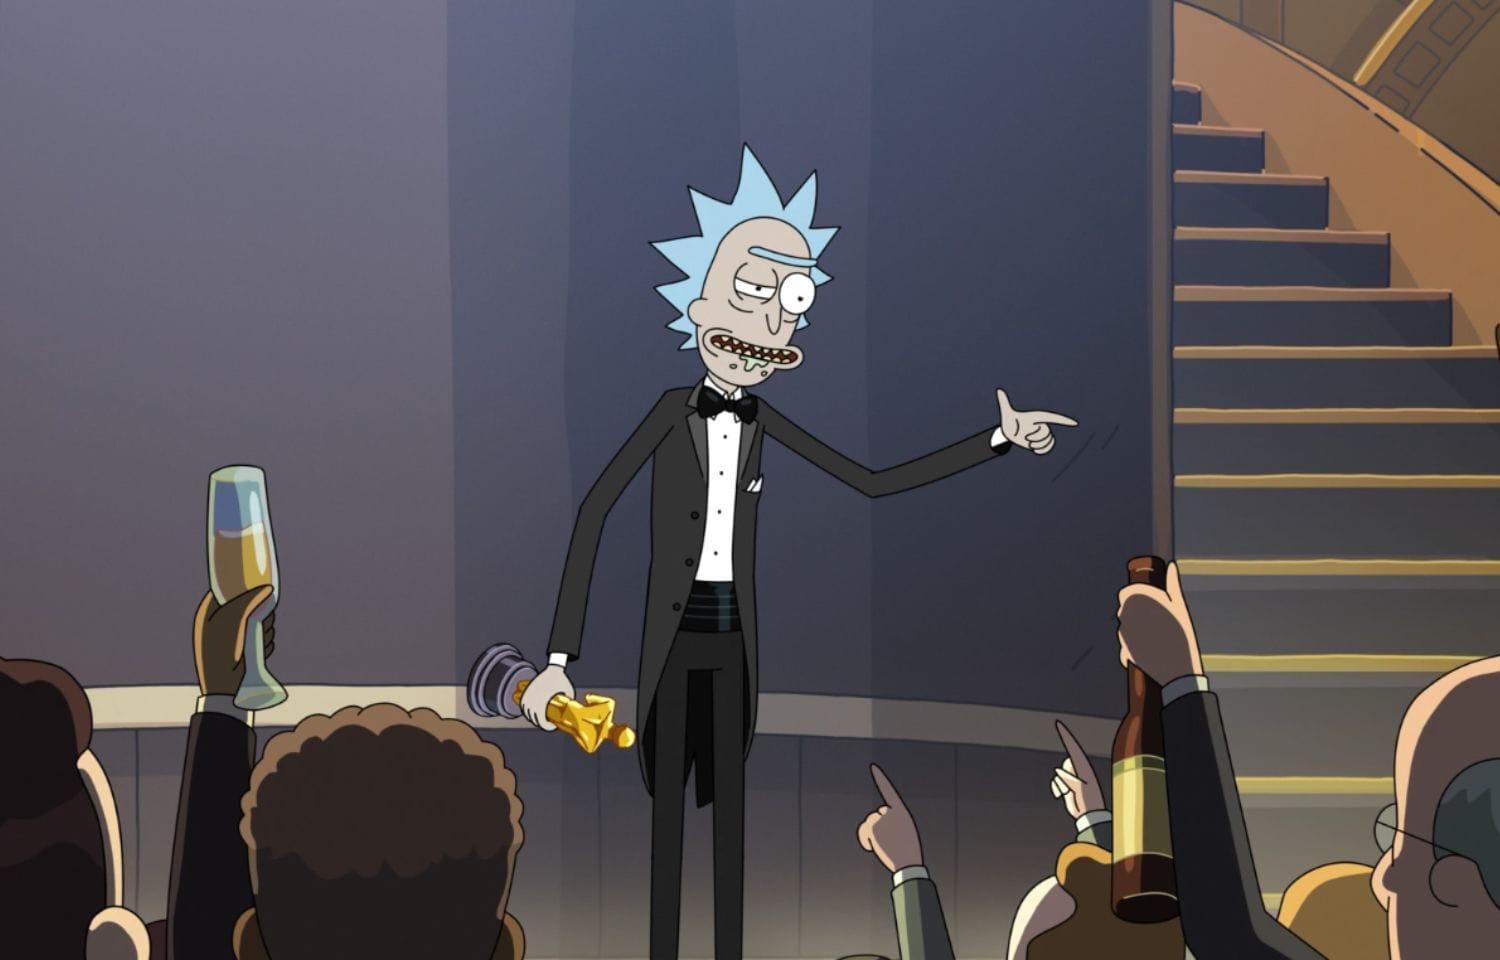 Rick and Morty Season 6 Episode 7